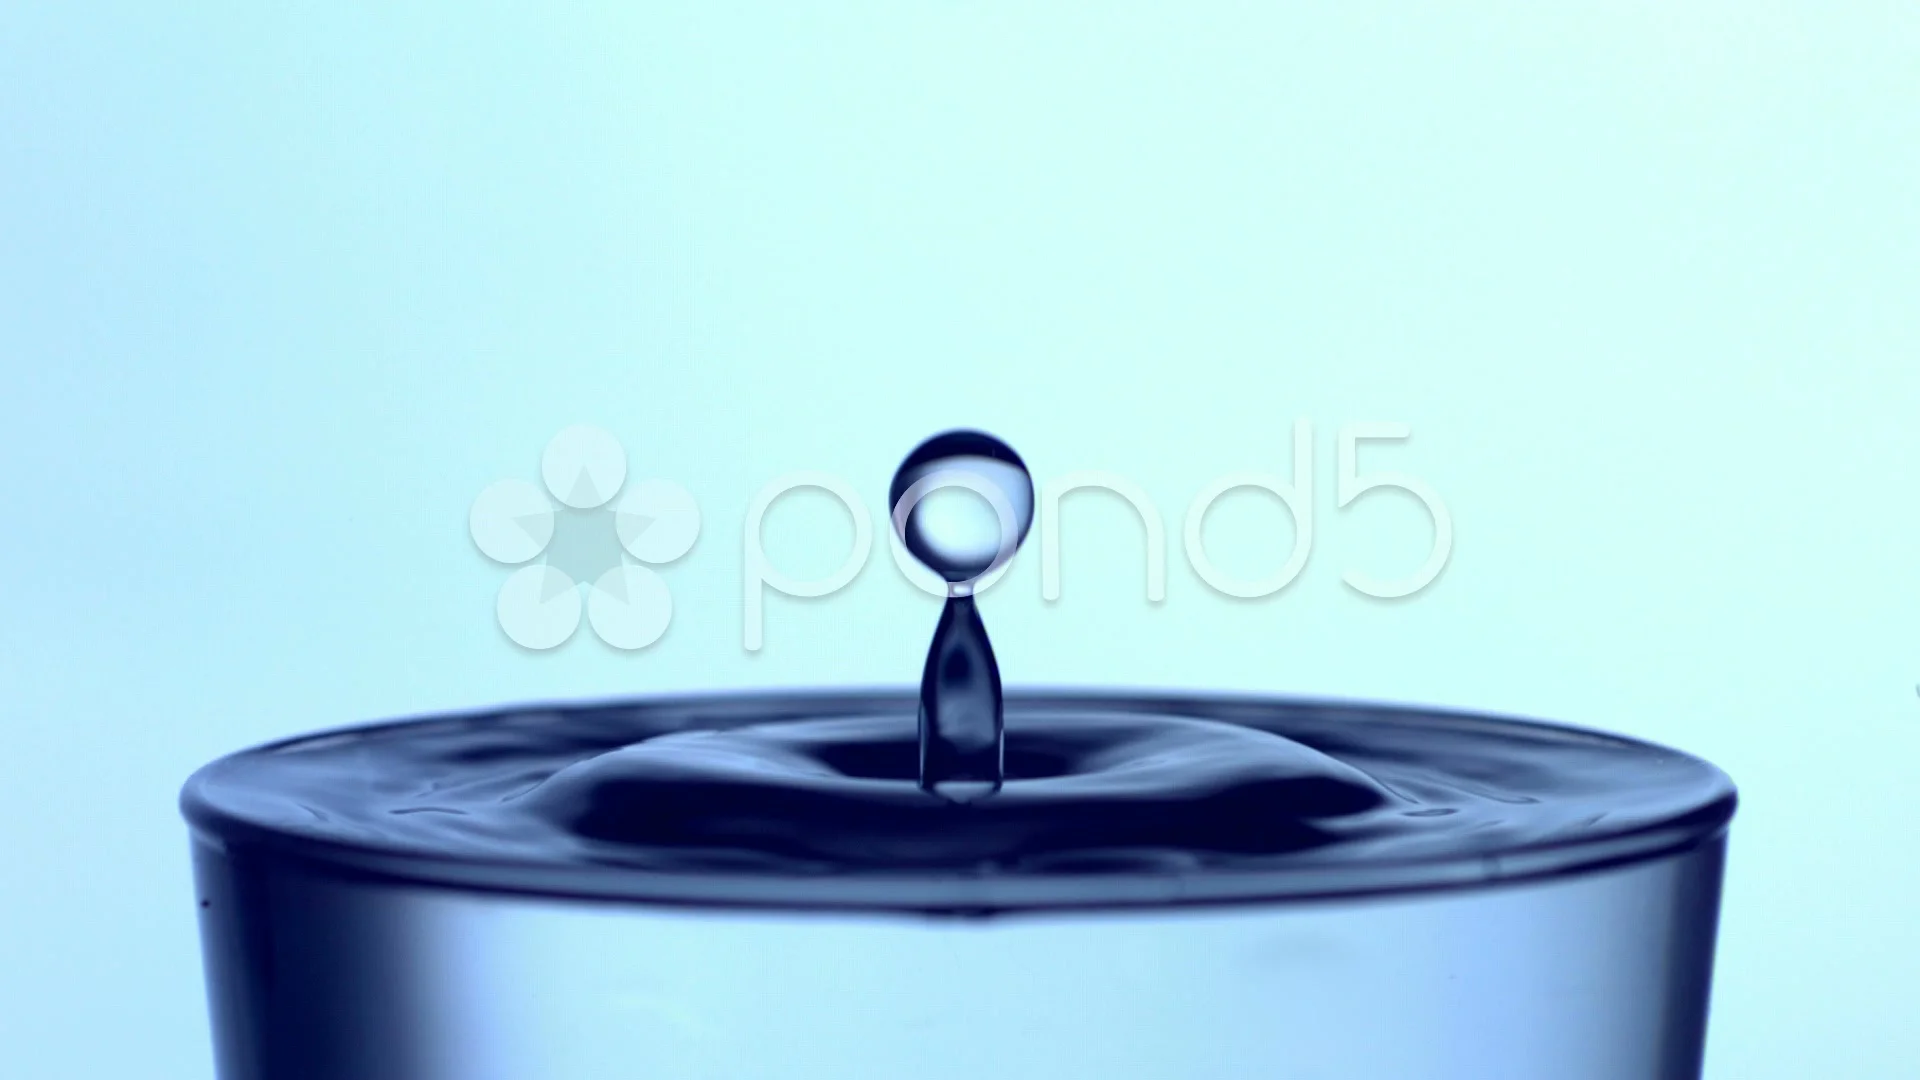 https://images.pond5.com/drop-water-splashing-cup-slow-032713464_prevstill.jpeg